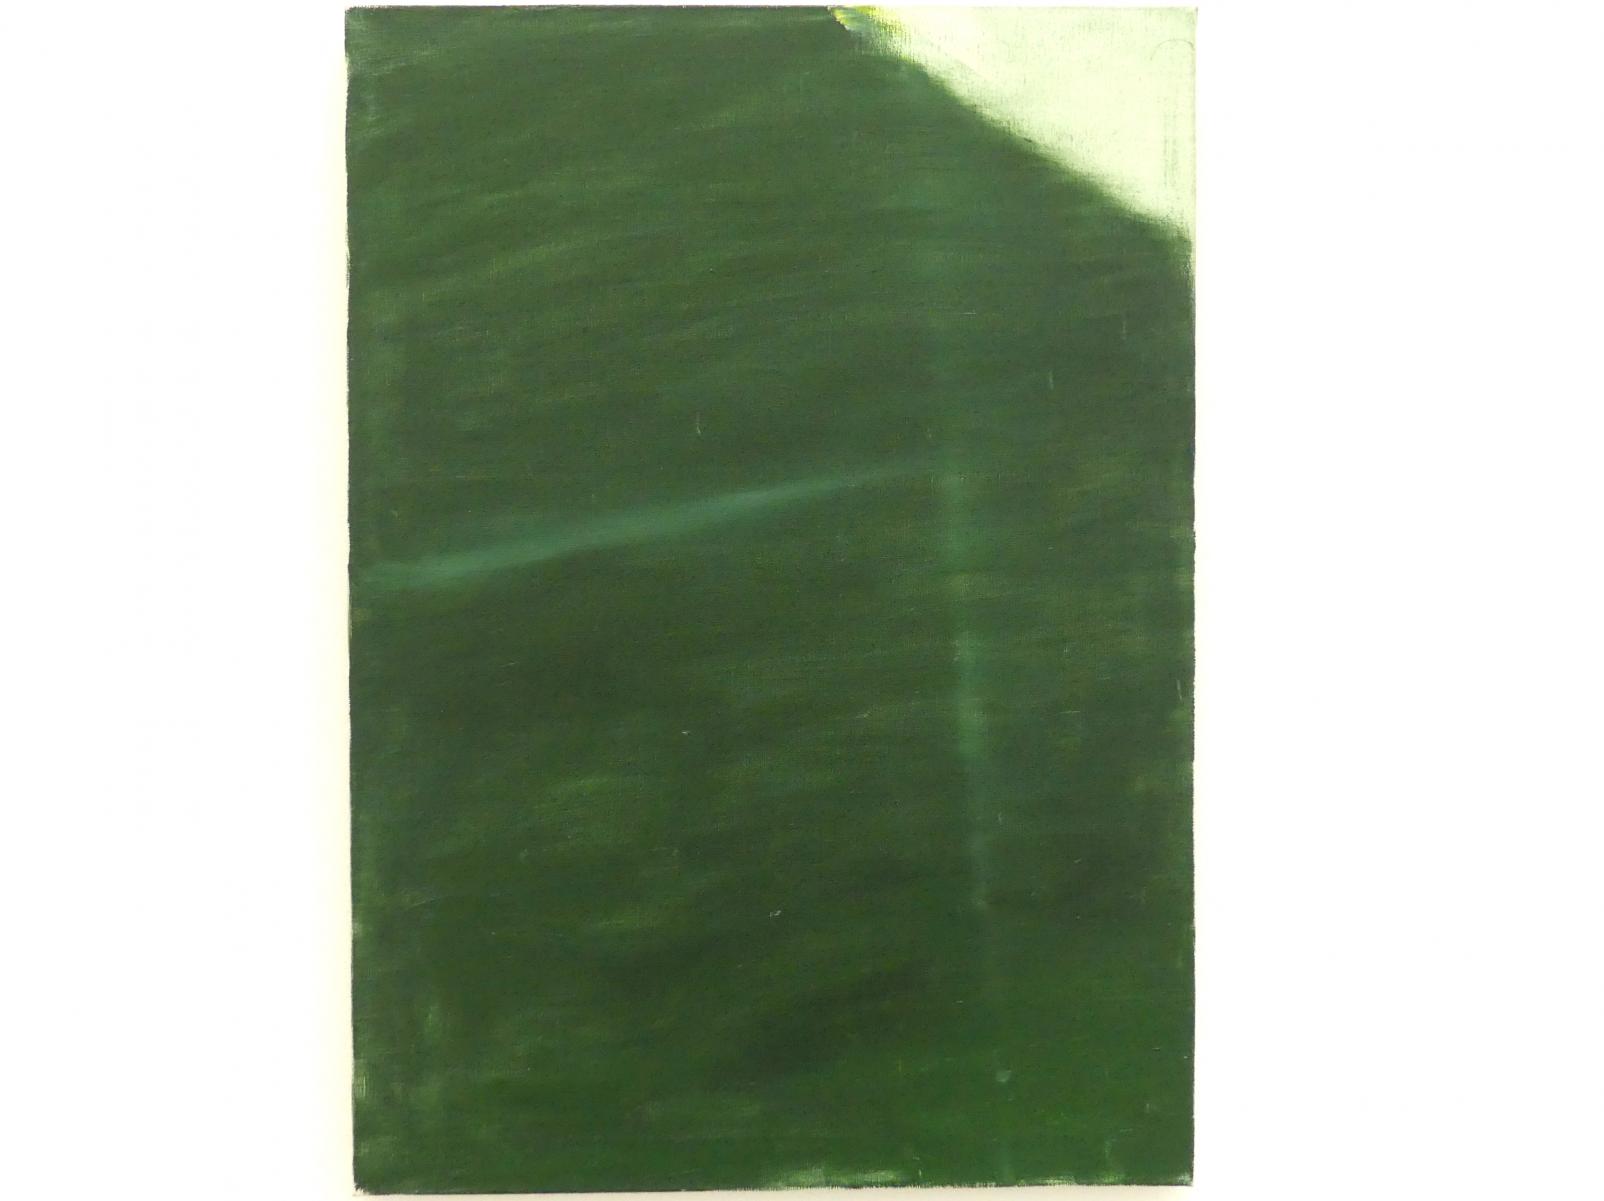 Raoul De Keyser (1964–2012), Untitled, München, Pinakothek der Moderne, Ausstellung "Raoul De Keyser – Œuvre" vom 05.04.-08.09.2019, Saal 21, 1988, Bild 1/2